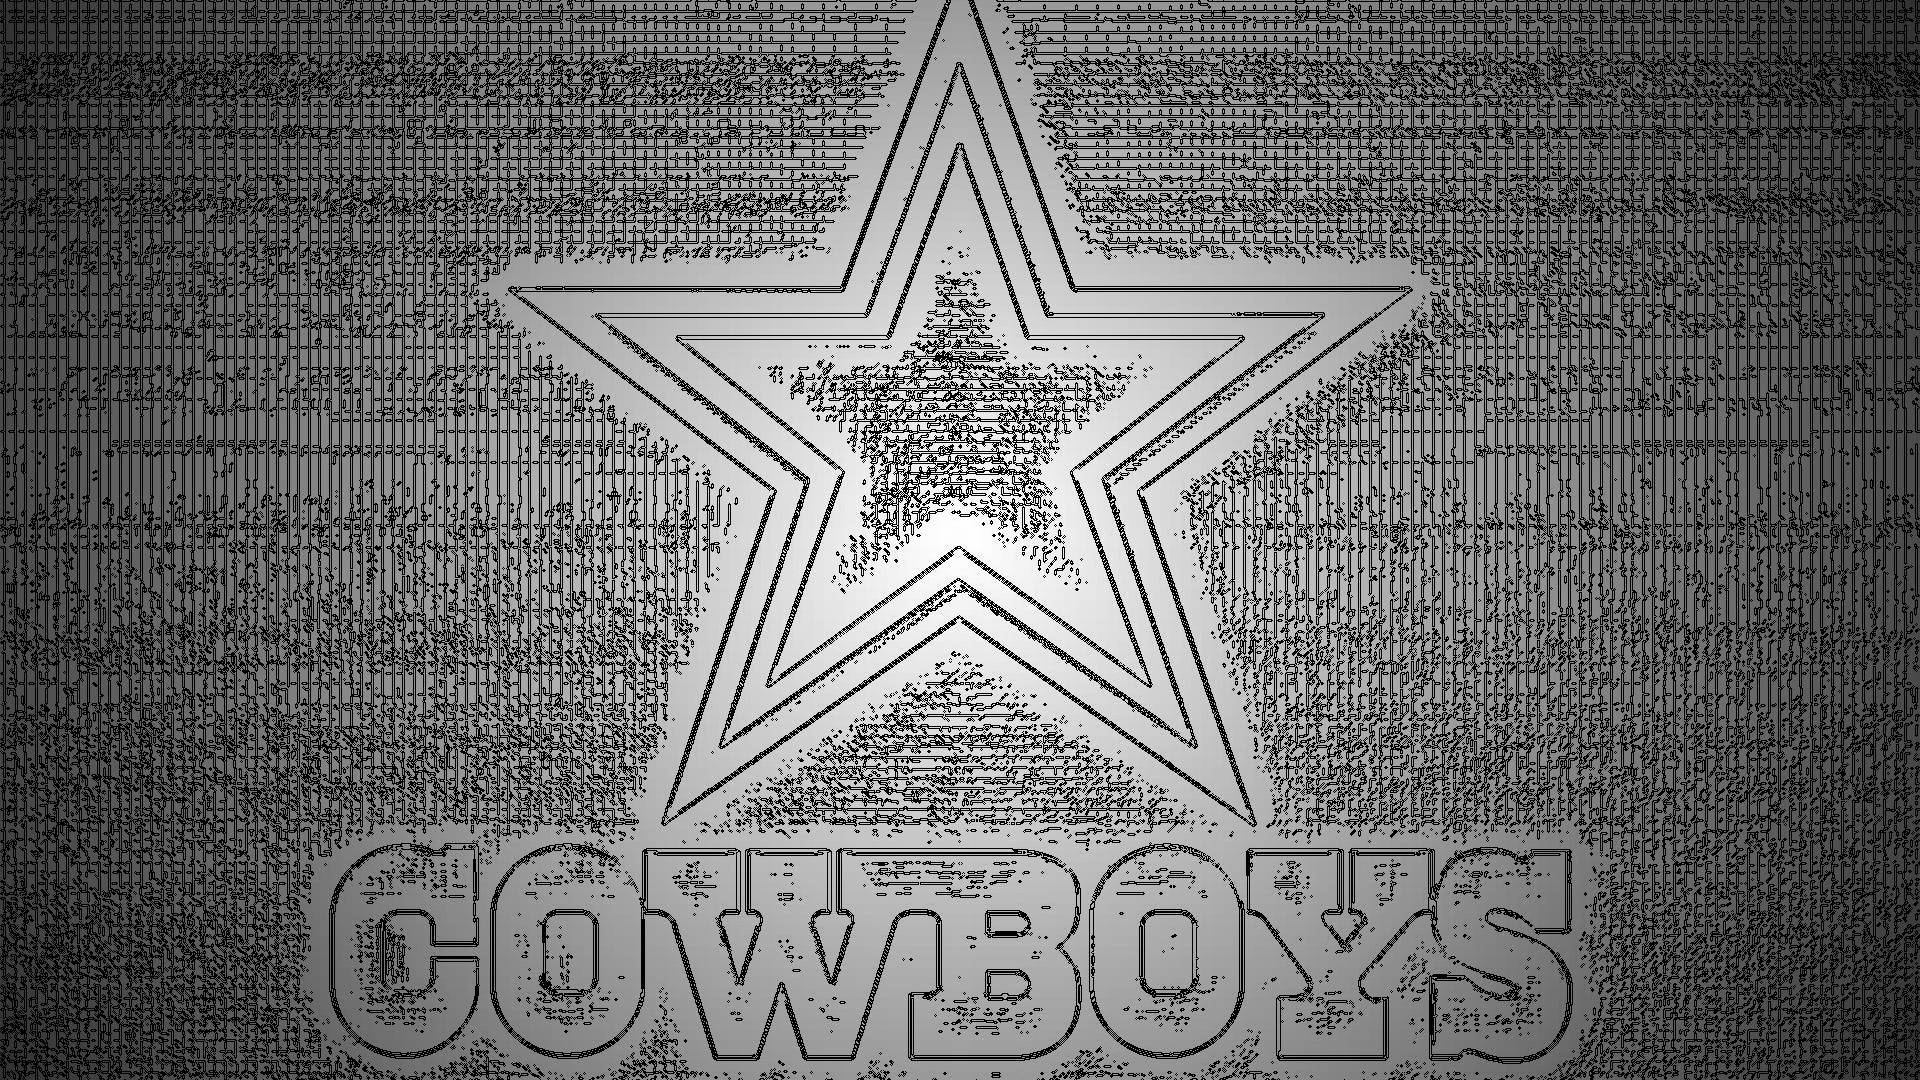 Hd Wallpaper Dallas Cowboys for Desktop Background 1136x640PX